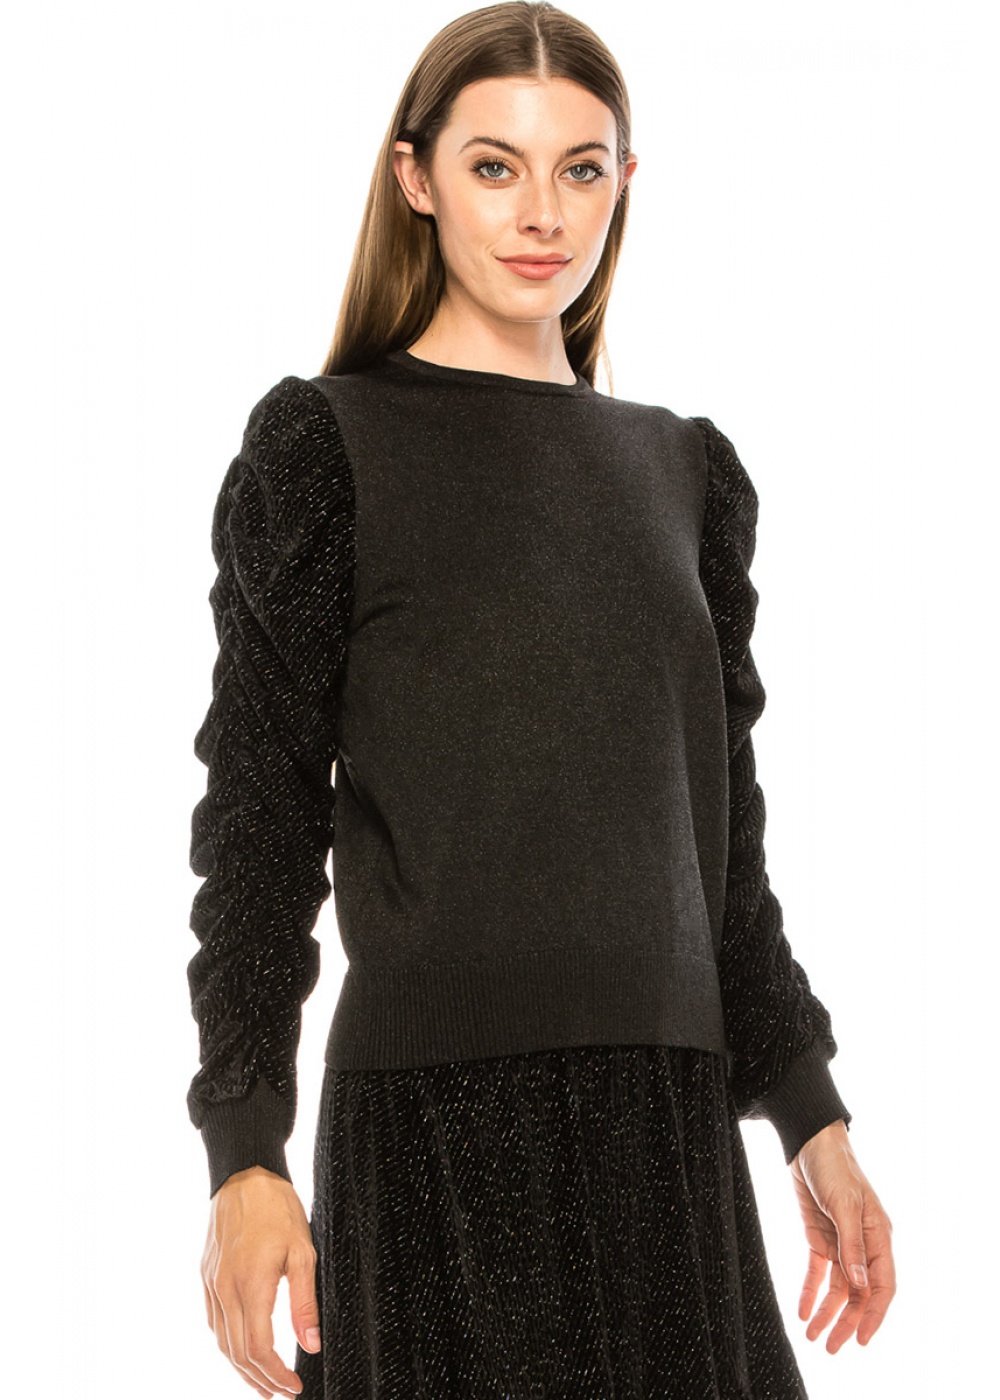 Black velvet sweater with volume lurex sleeves